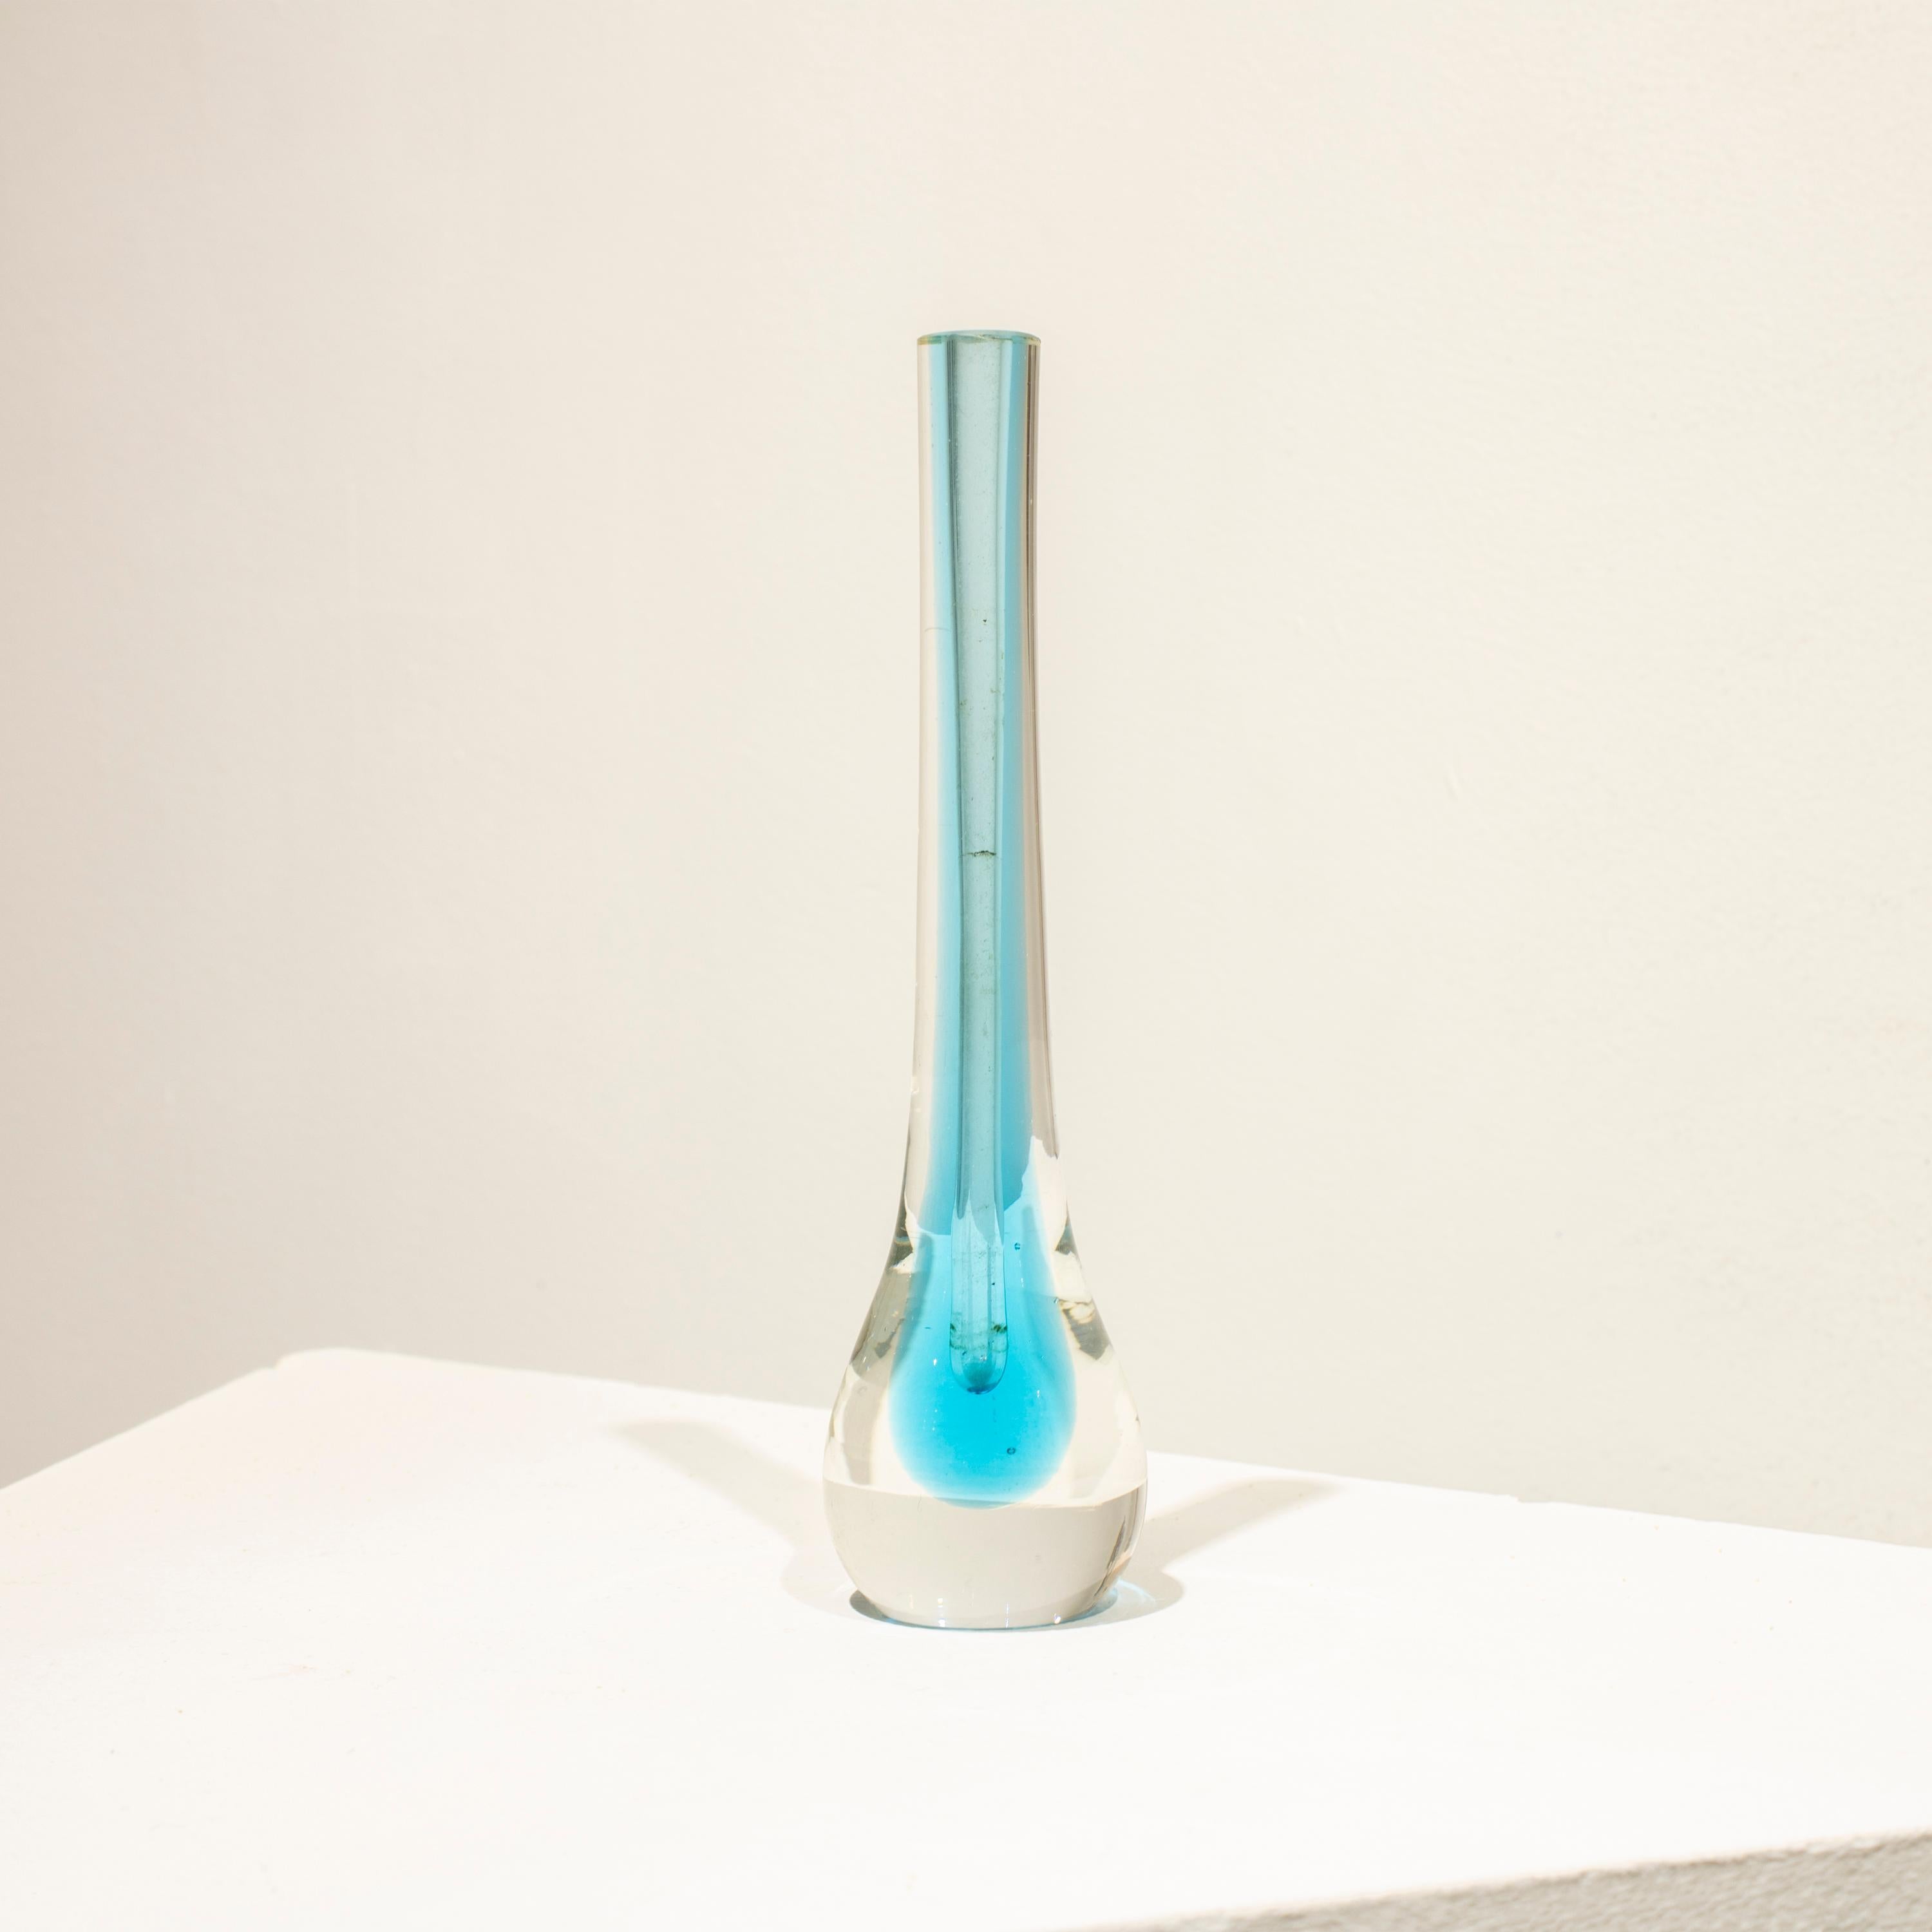 Italian Flavio Poli Hand-Crafted Blue Murano Small Glass Vase, Italy, 1970 For Sale